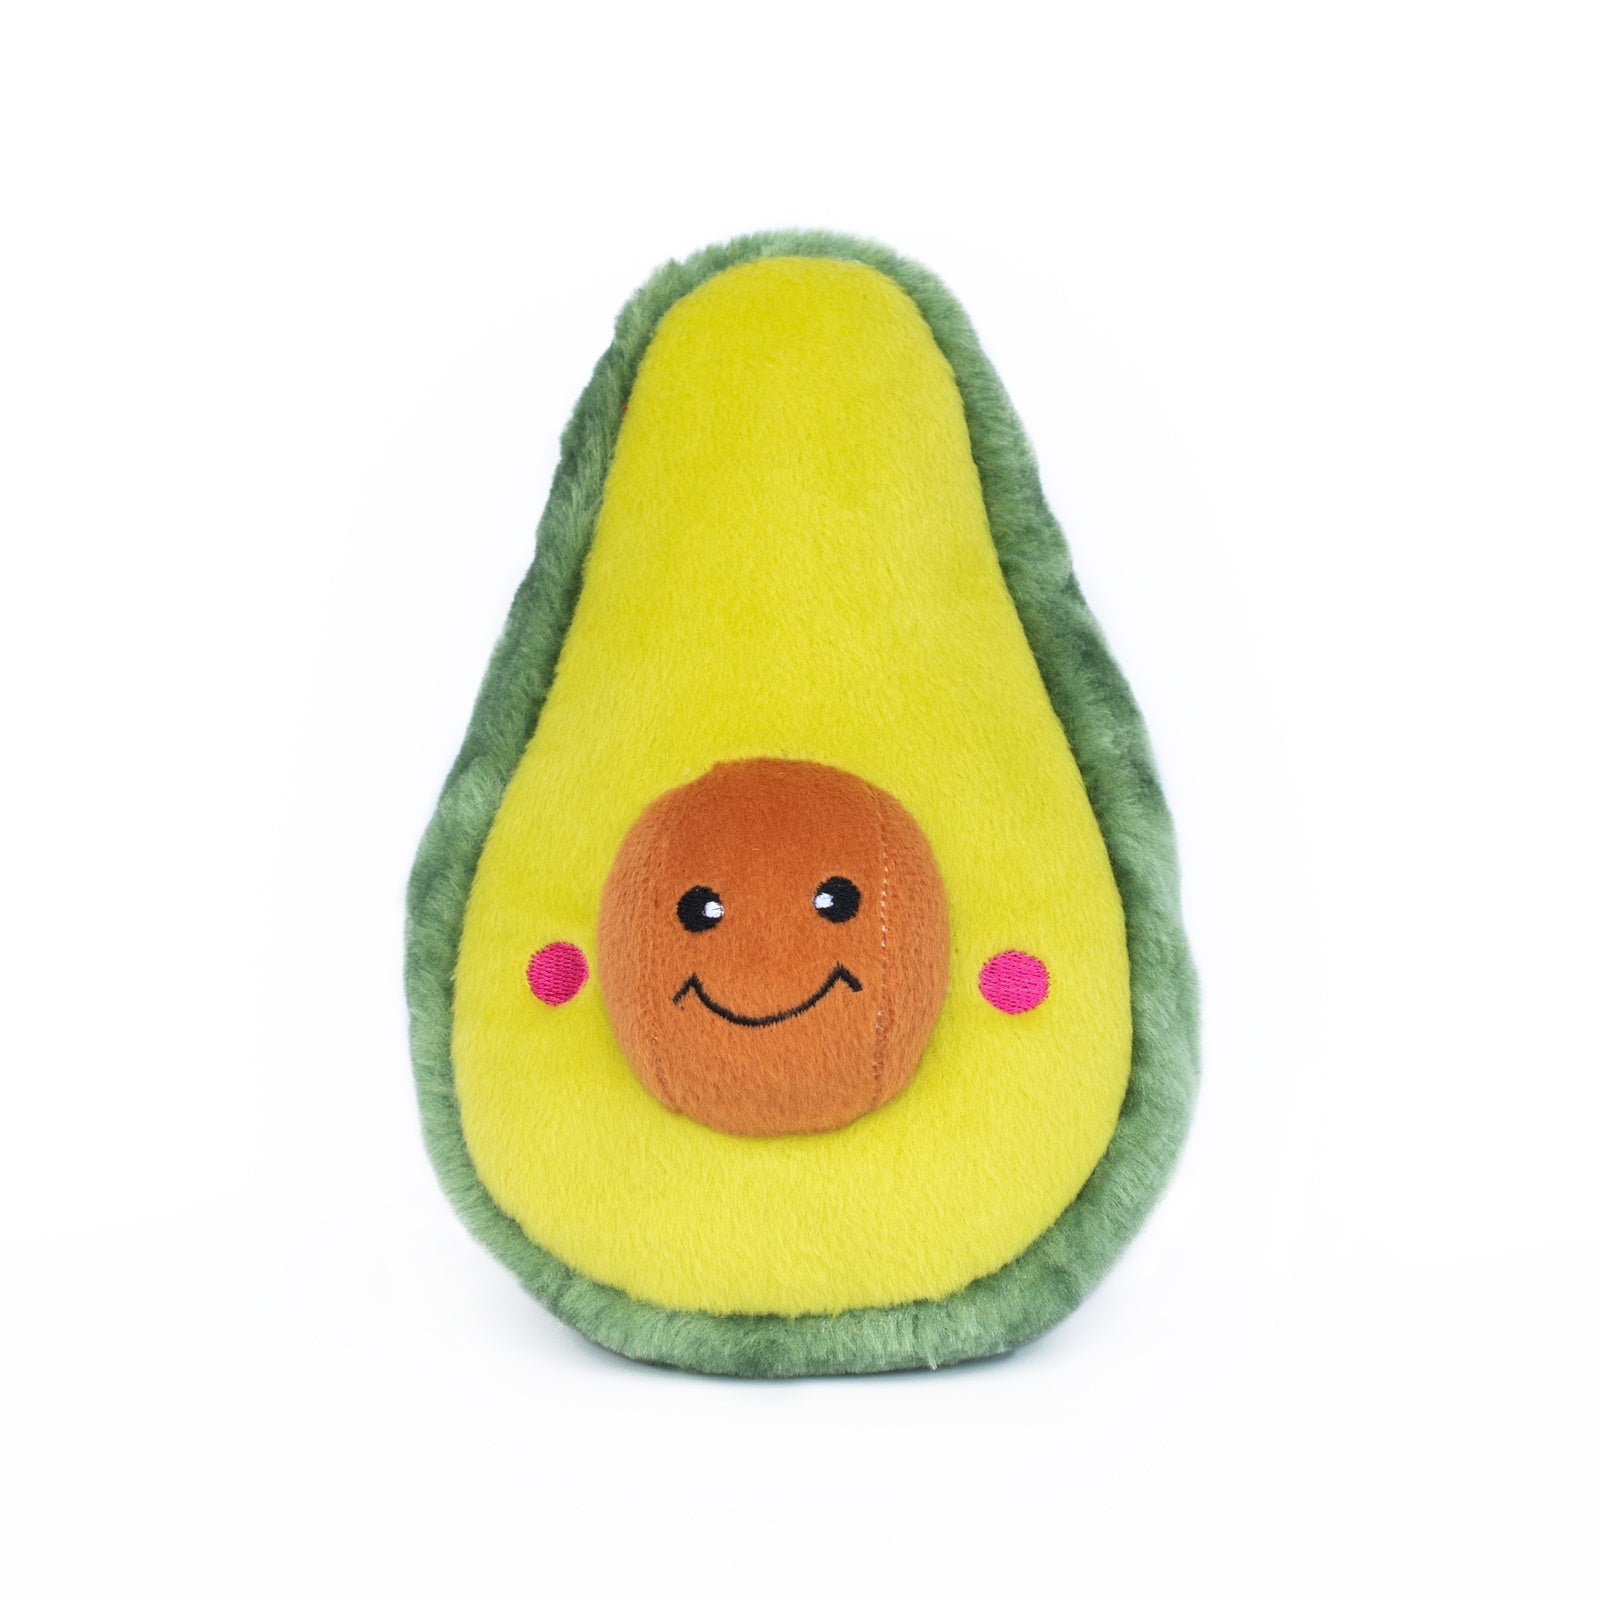 ZIPPY PAWS - NomNomz Jumbo Avocado Plush Toy